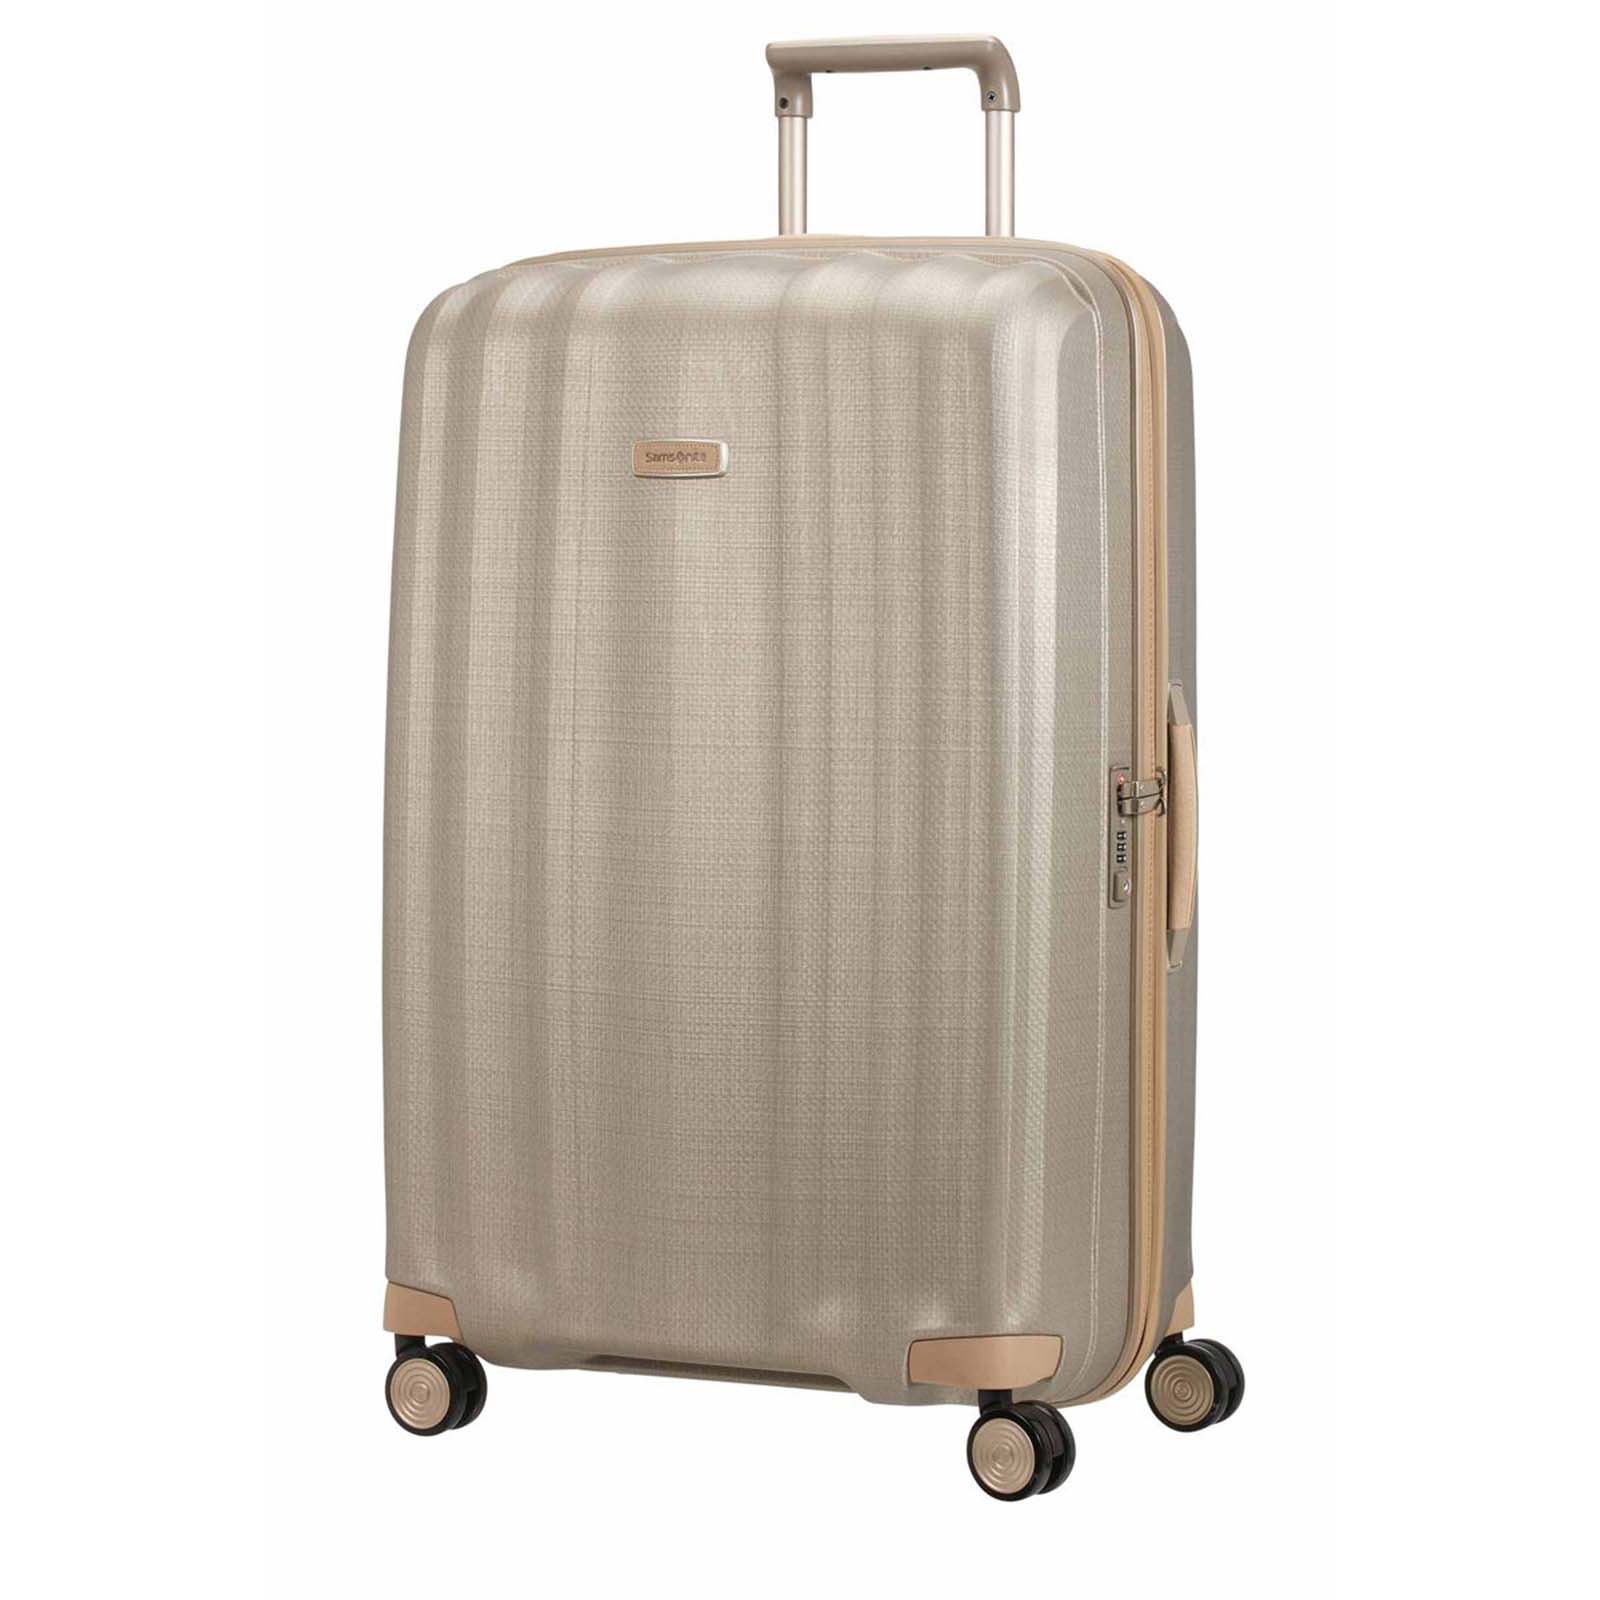 Samsonite-Lite-Cube-Prime-82cm-Suitcase-Ivory-Gold-Front-Angle